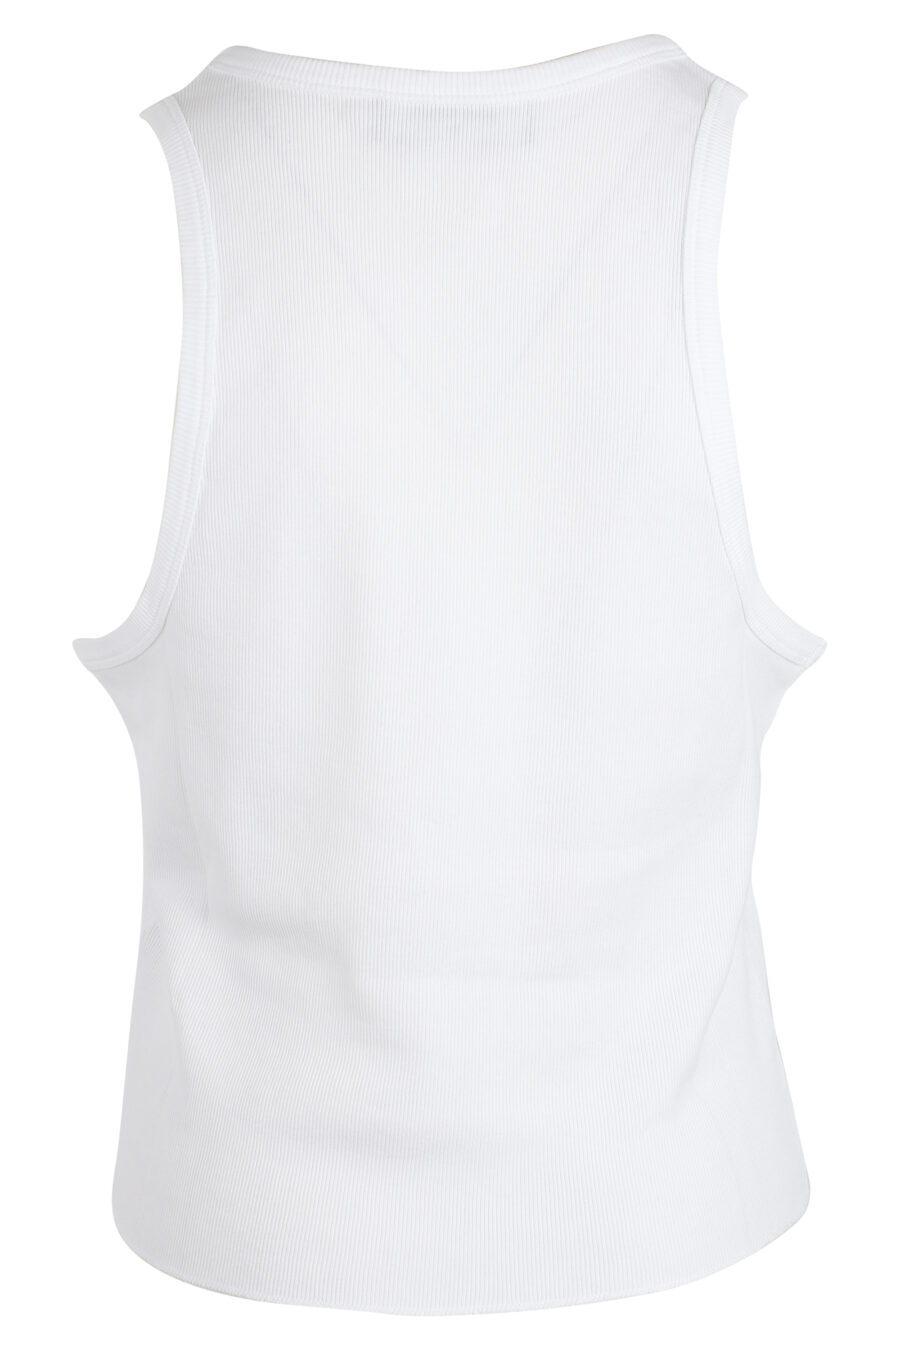 Camiseta sin mangas blanca con logo paz - IMG 4861